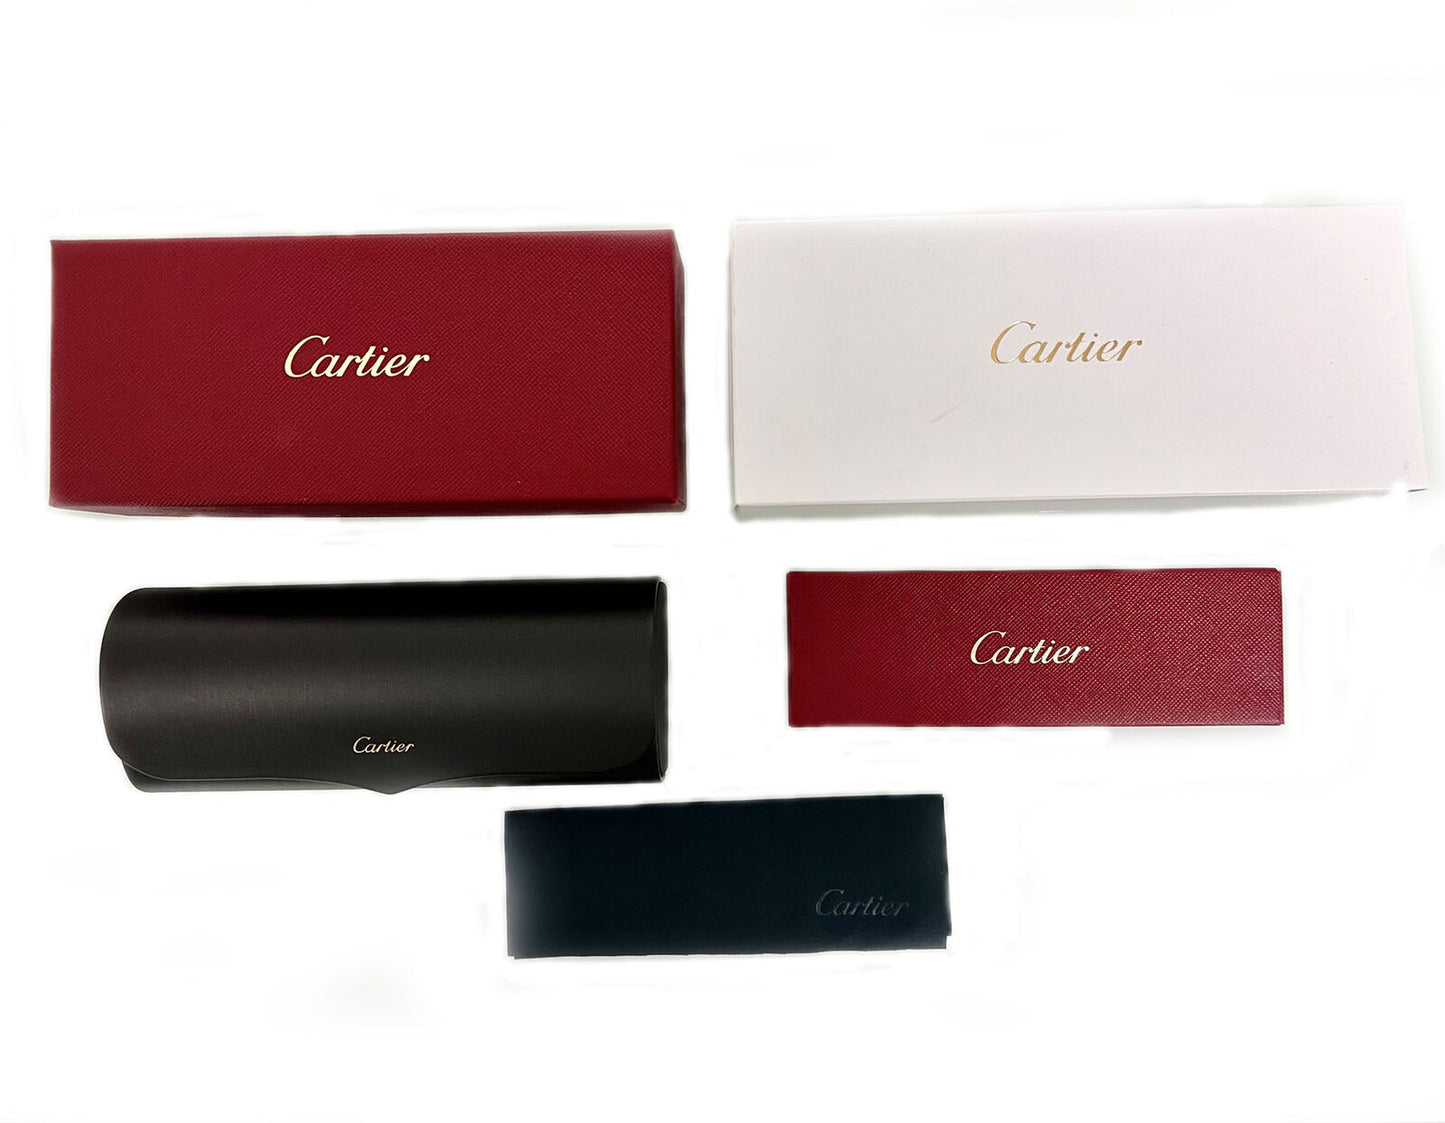 Cartier CT0364S-002 59mm New Sunglasses